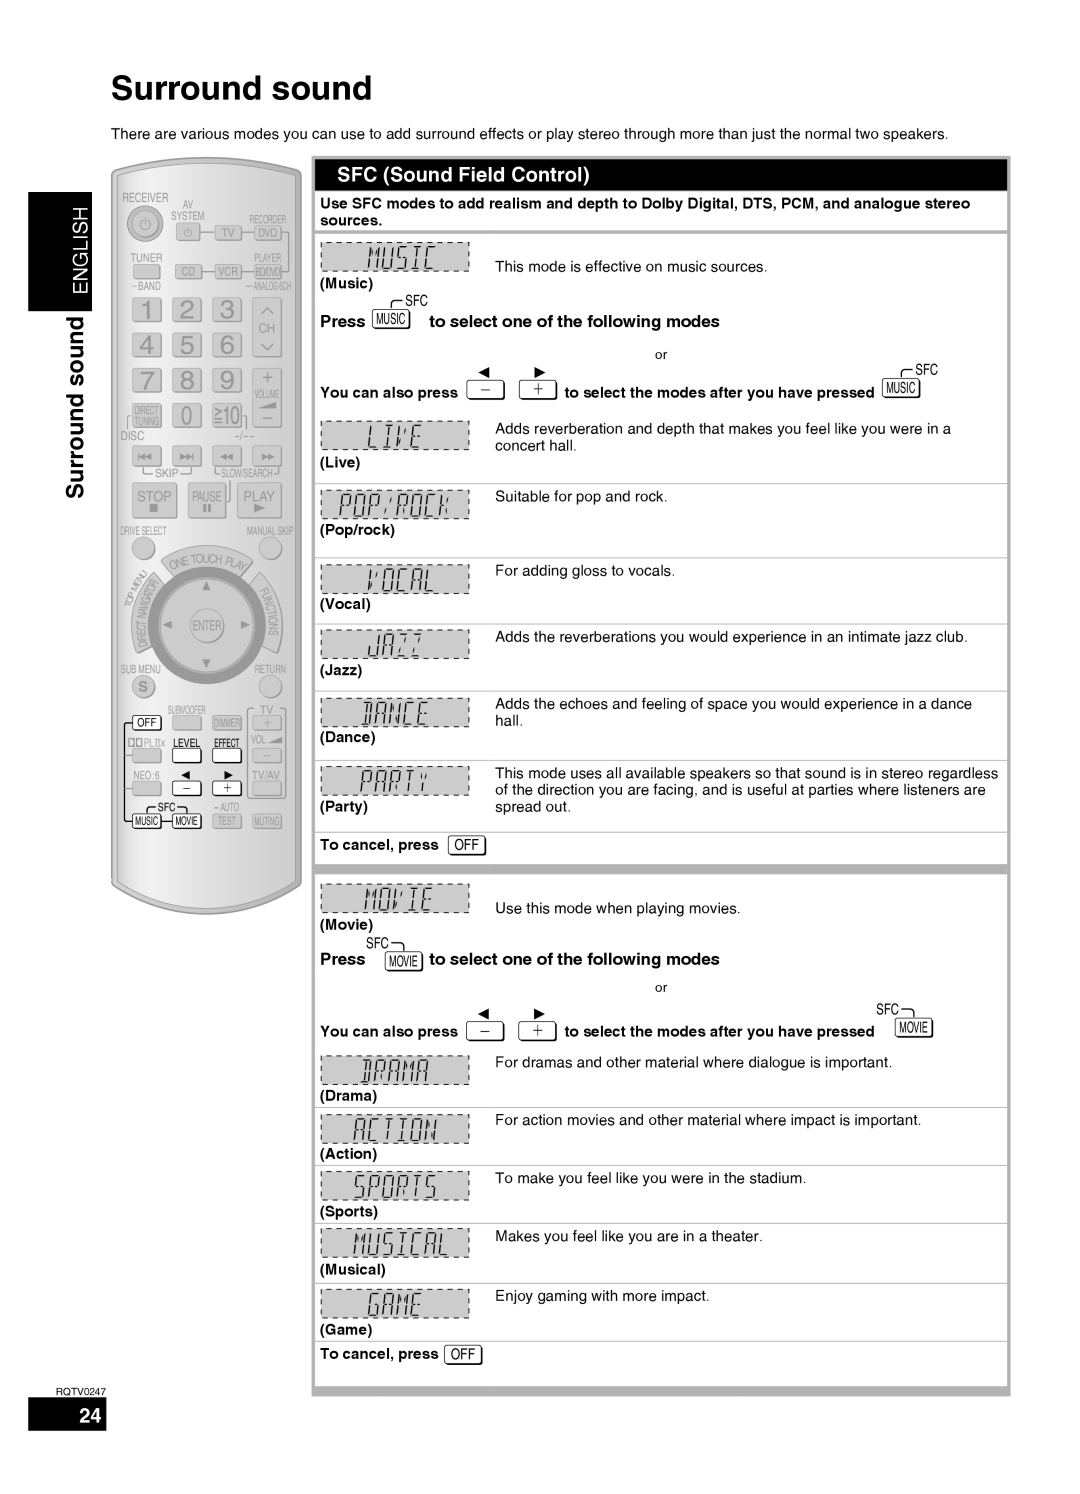 Panasonic SA-XR59 manual Surround sound, SFC Sound Field Control, English 